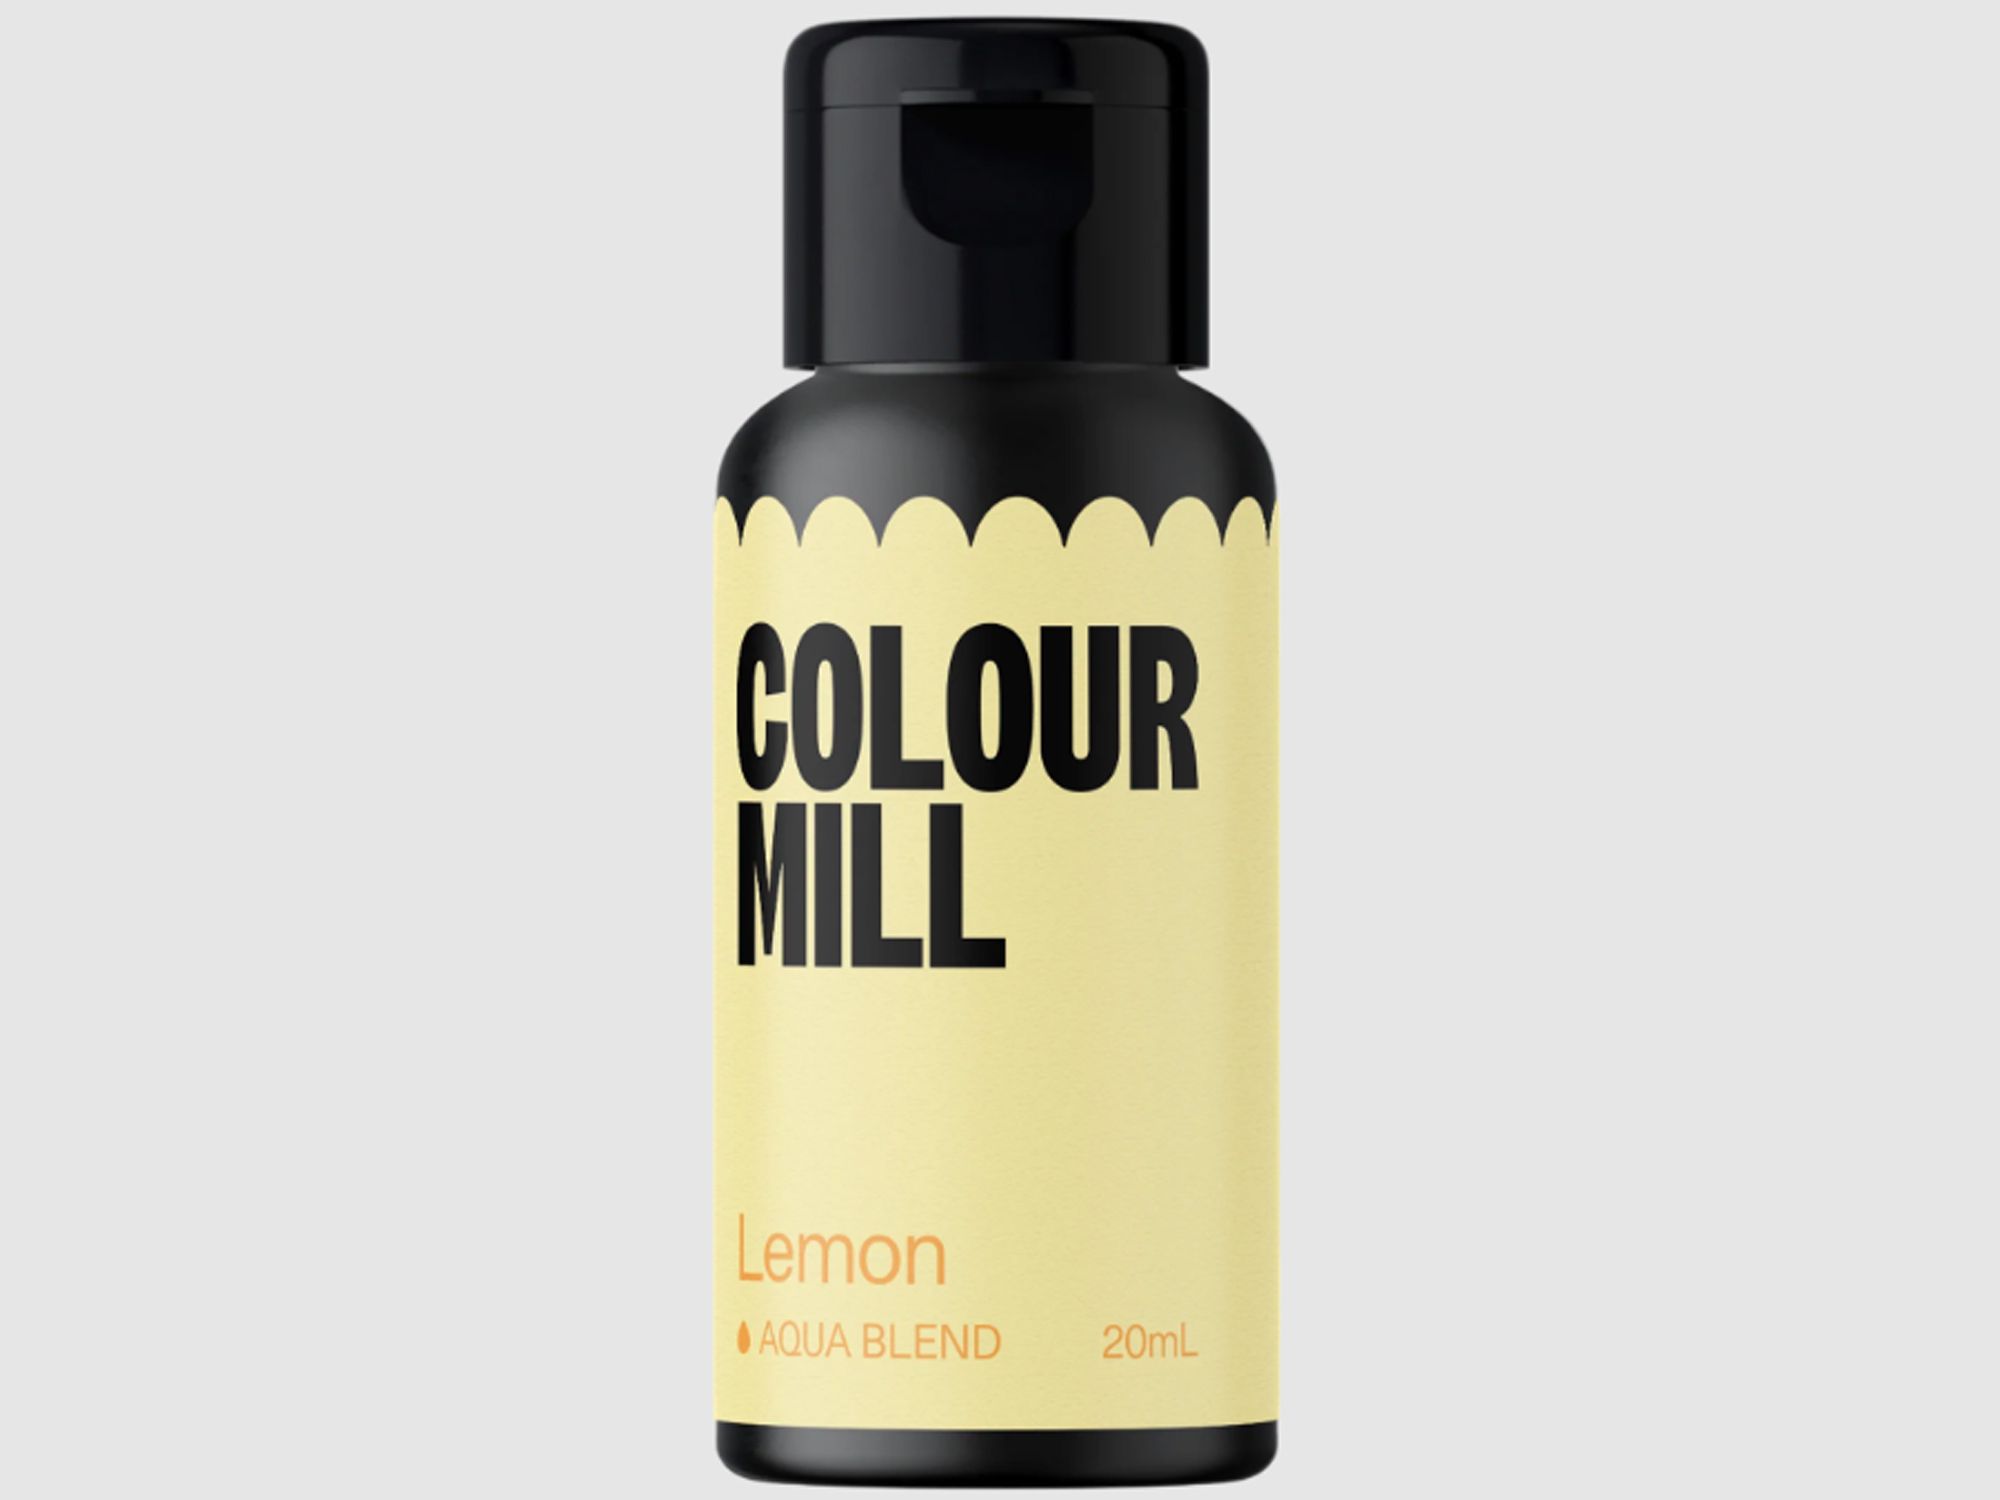 Colour Mill Lemon (Aqua Blend) 20ml